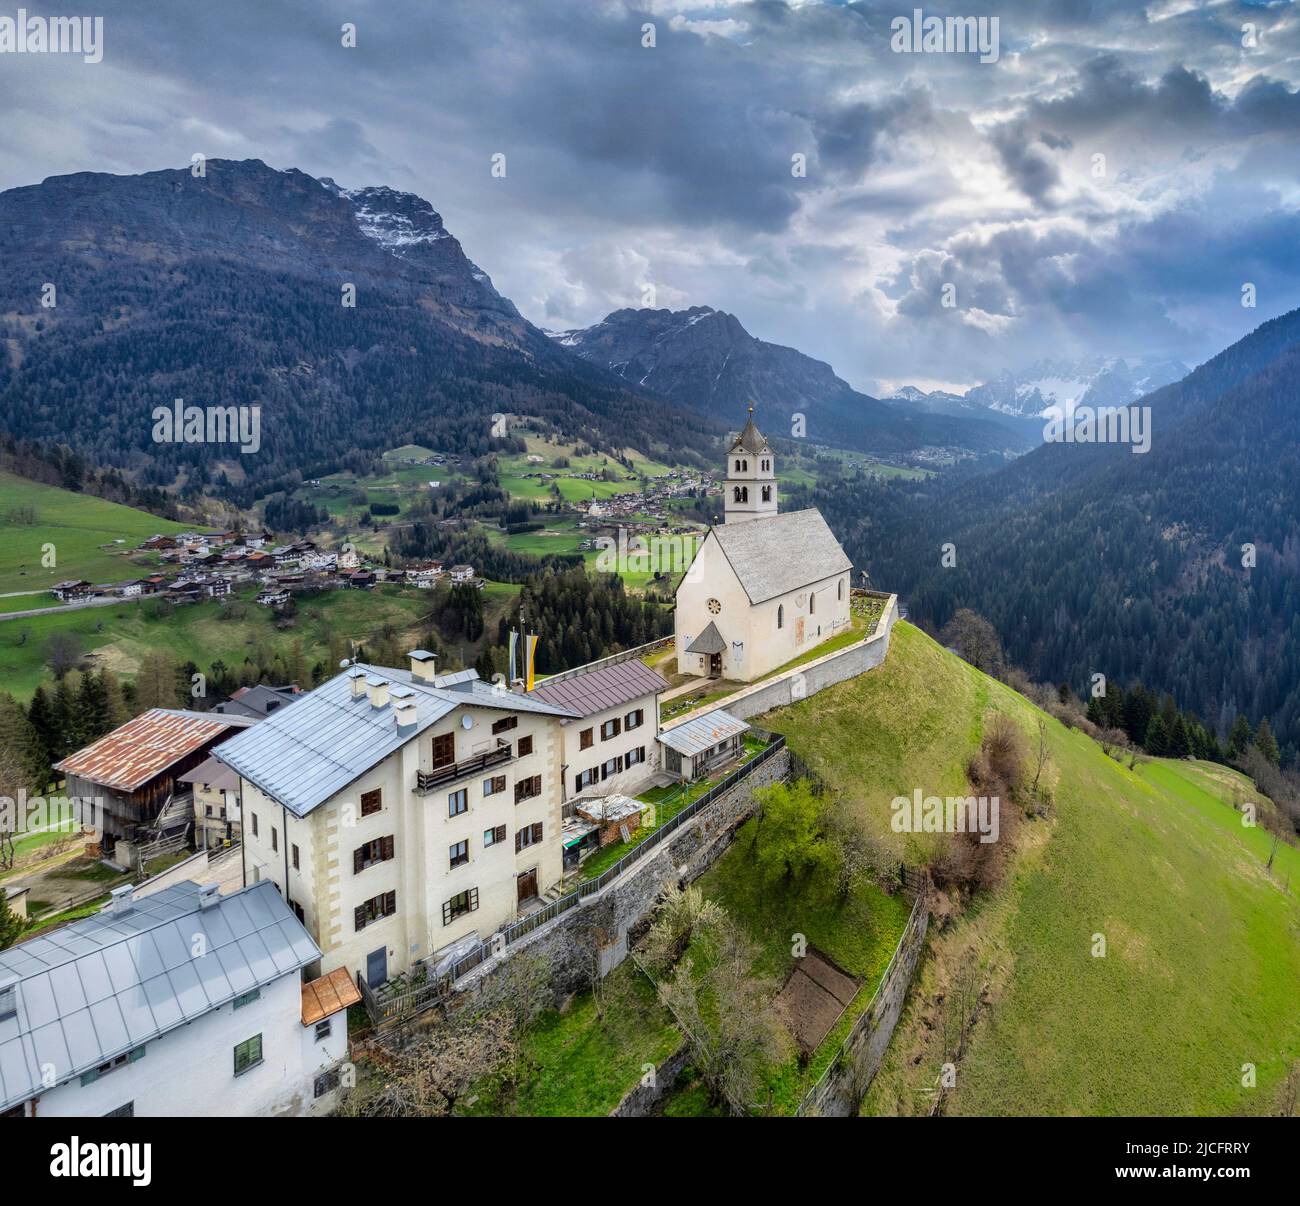 Italy, Veneto, Belluno provice, the alpine village of Colle Santa Lucia with the ancient church on the hill Stock Photo